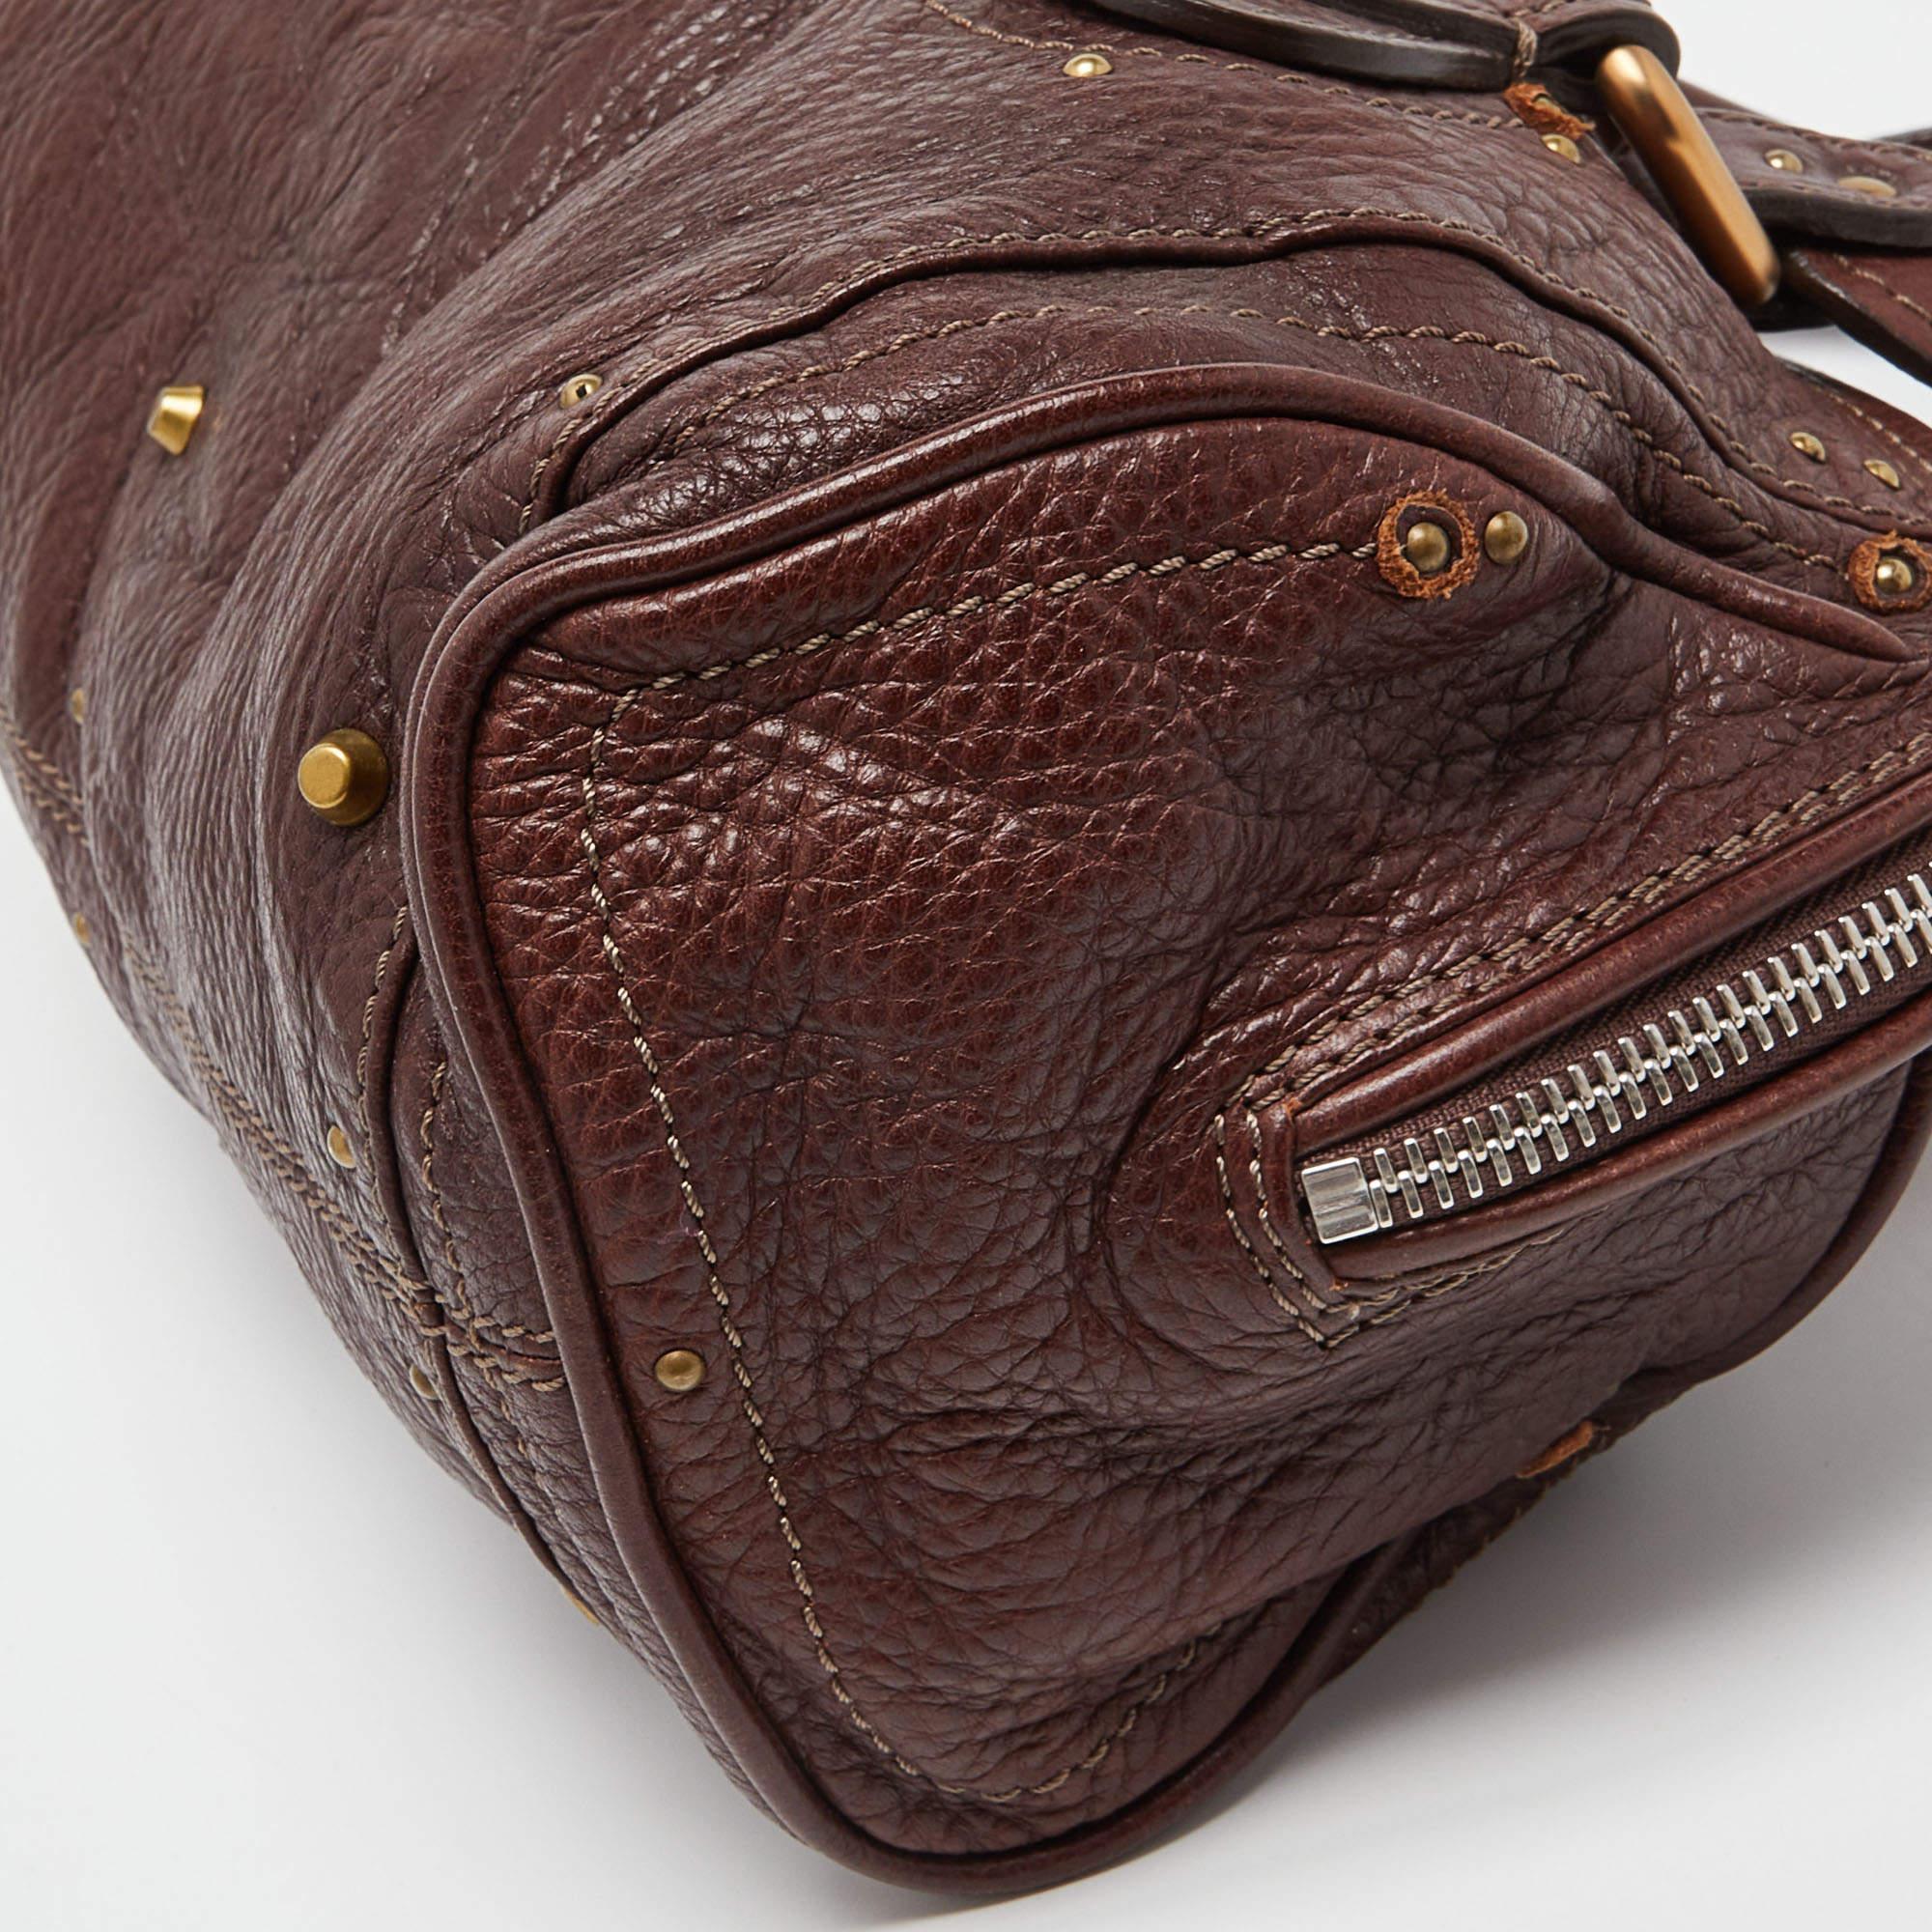 Chloe Burgundy Leather Paddington Bag 2